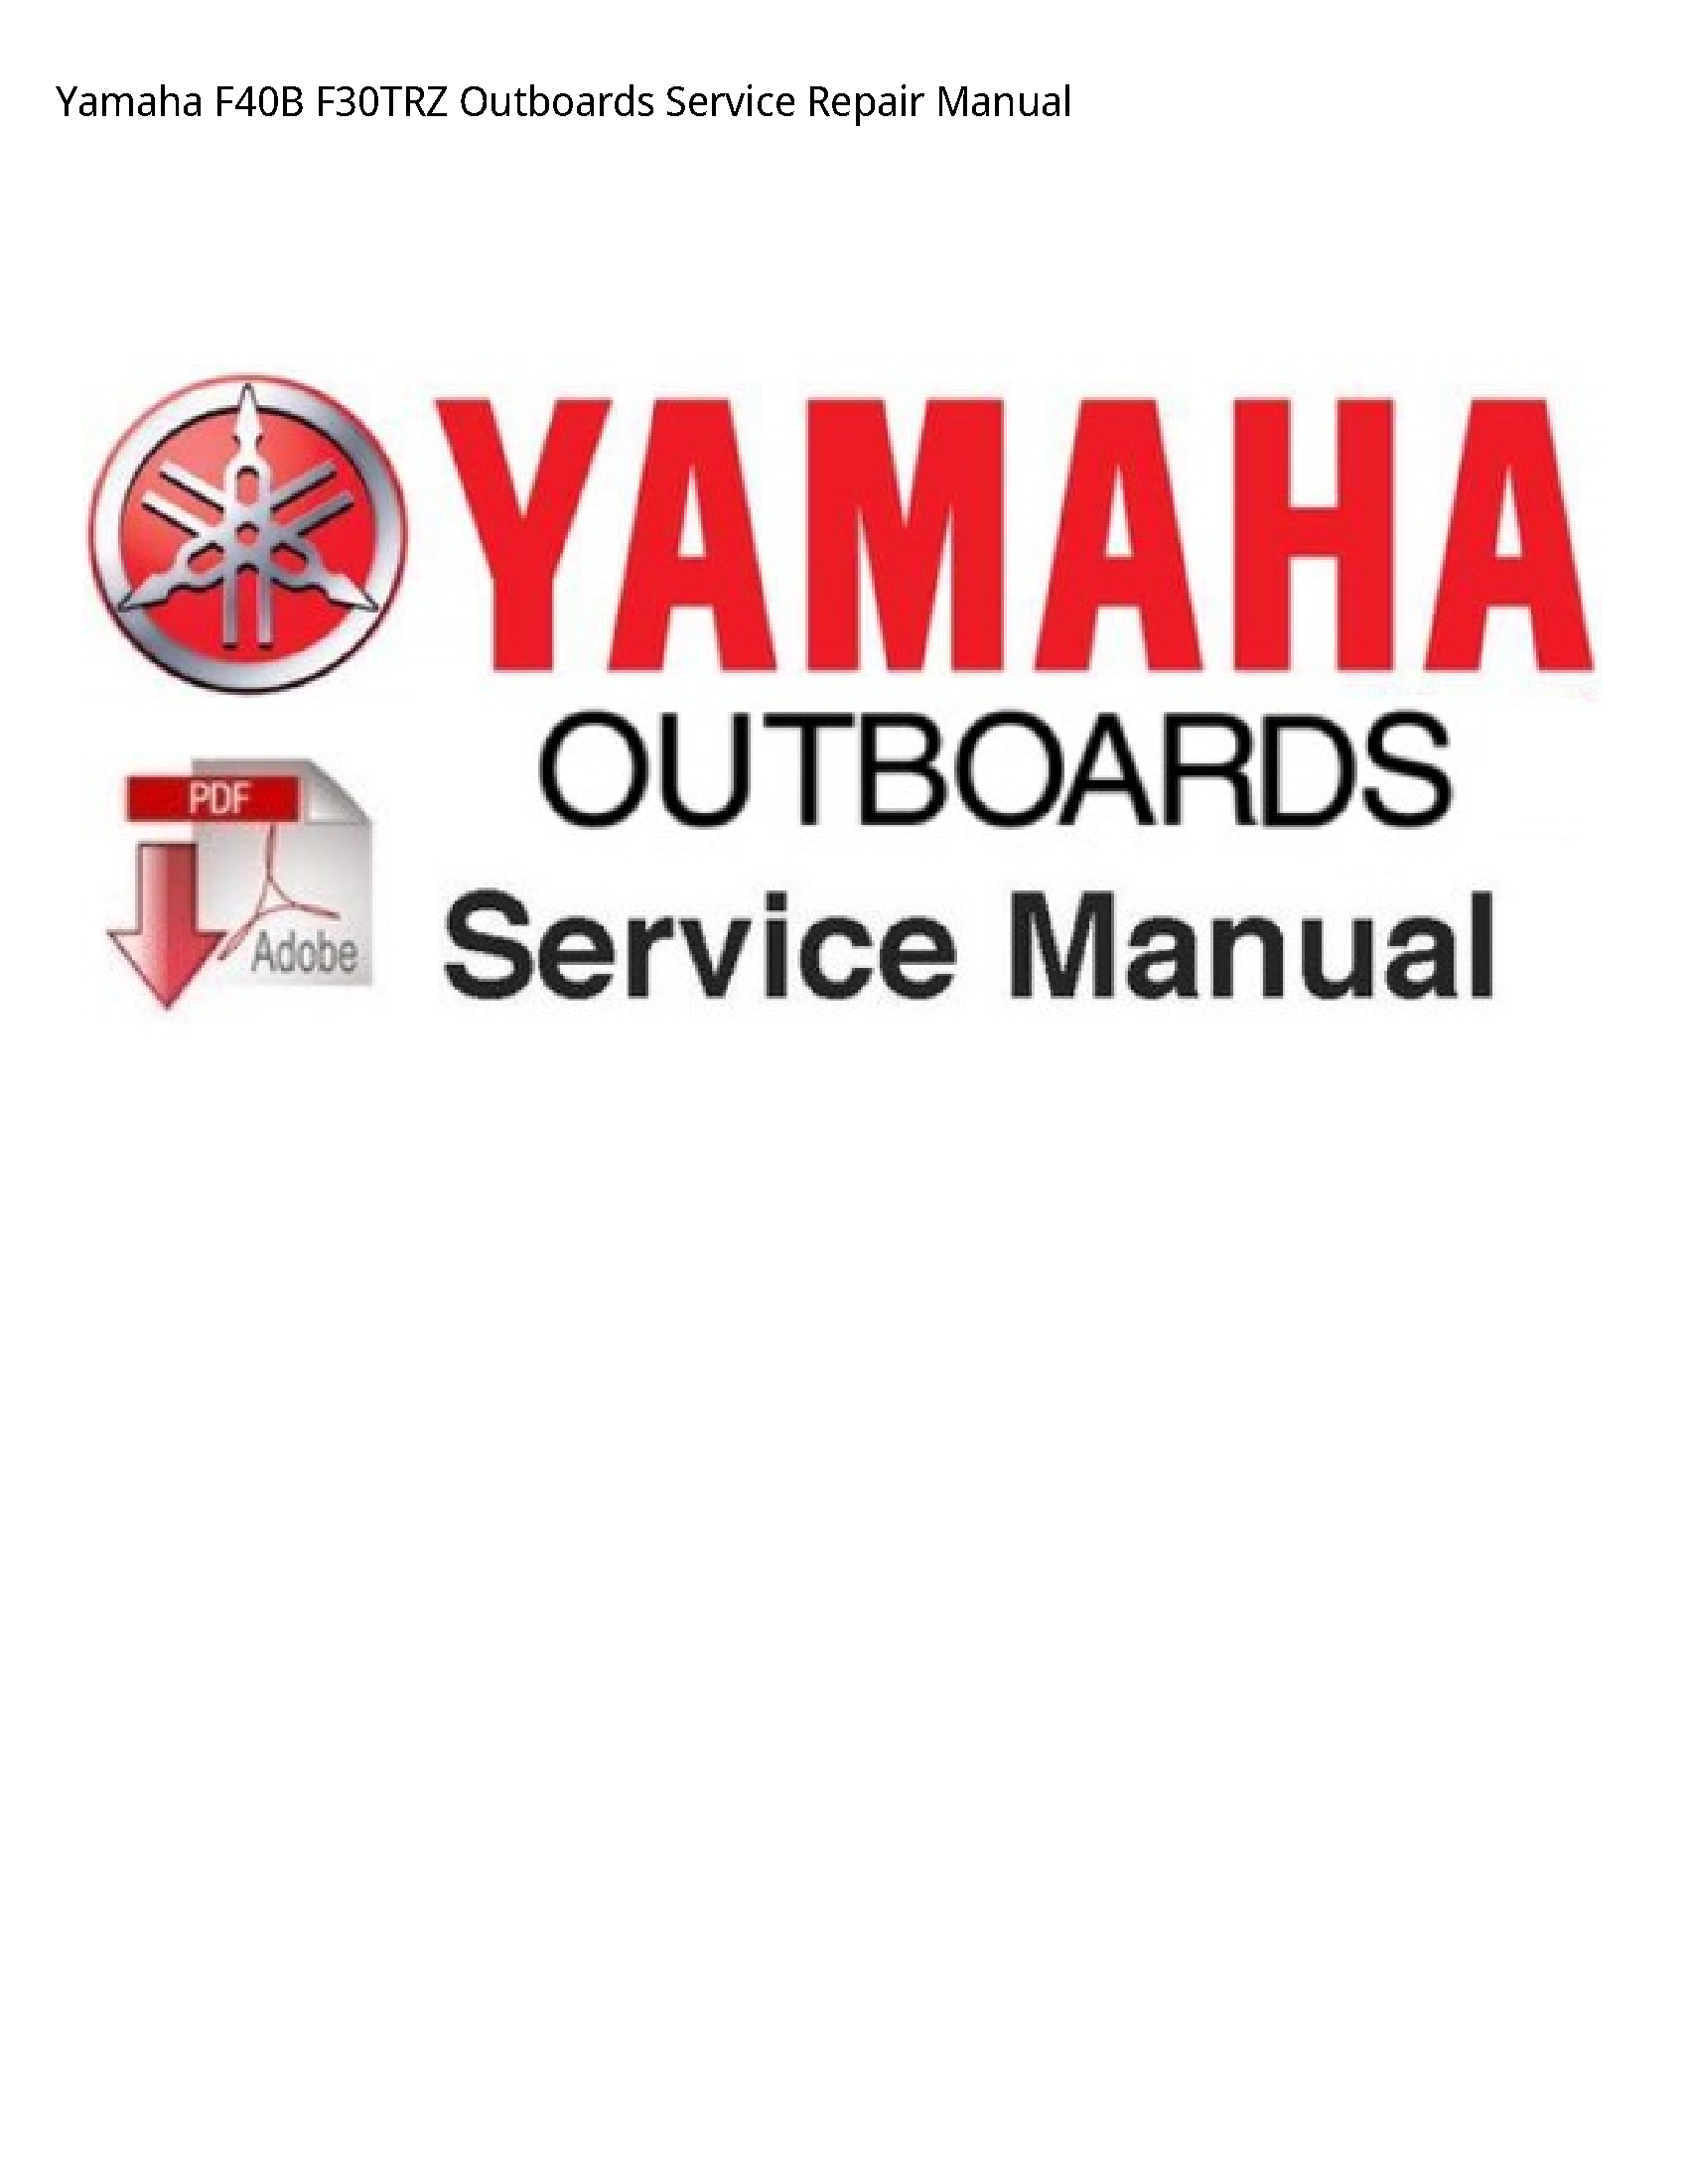 Yamaha F40B Outboards manual